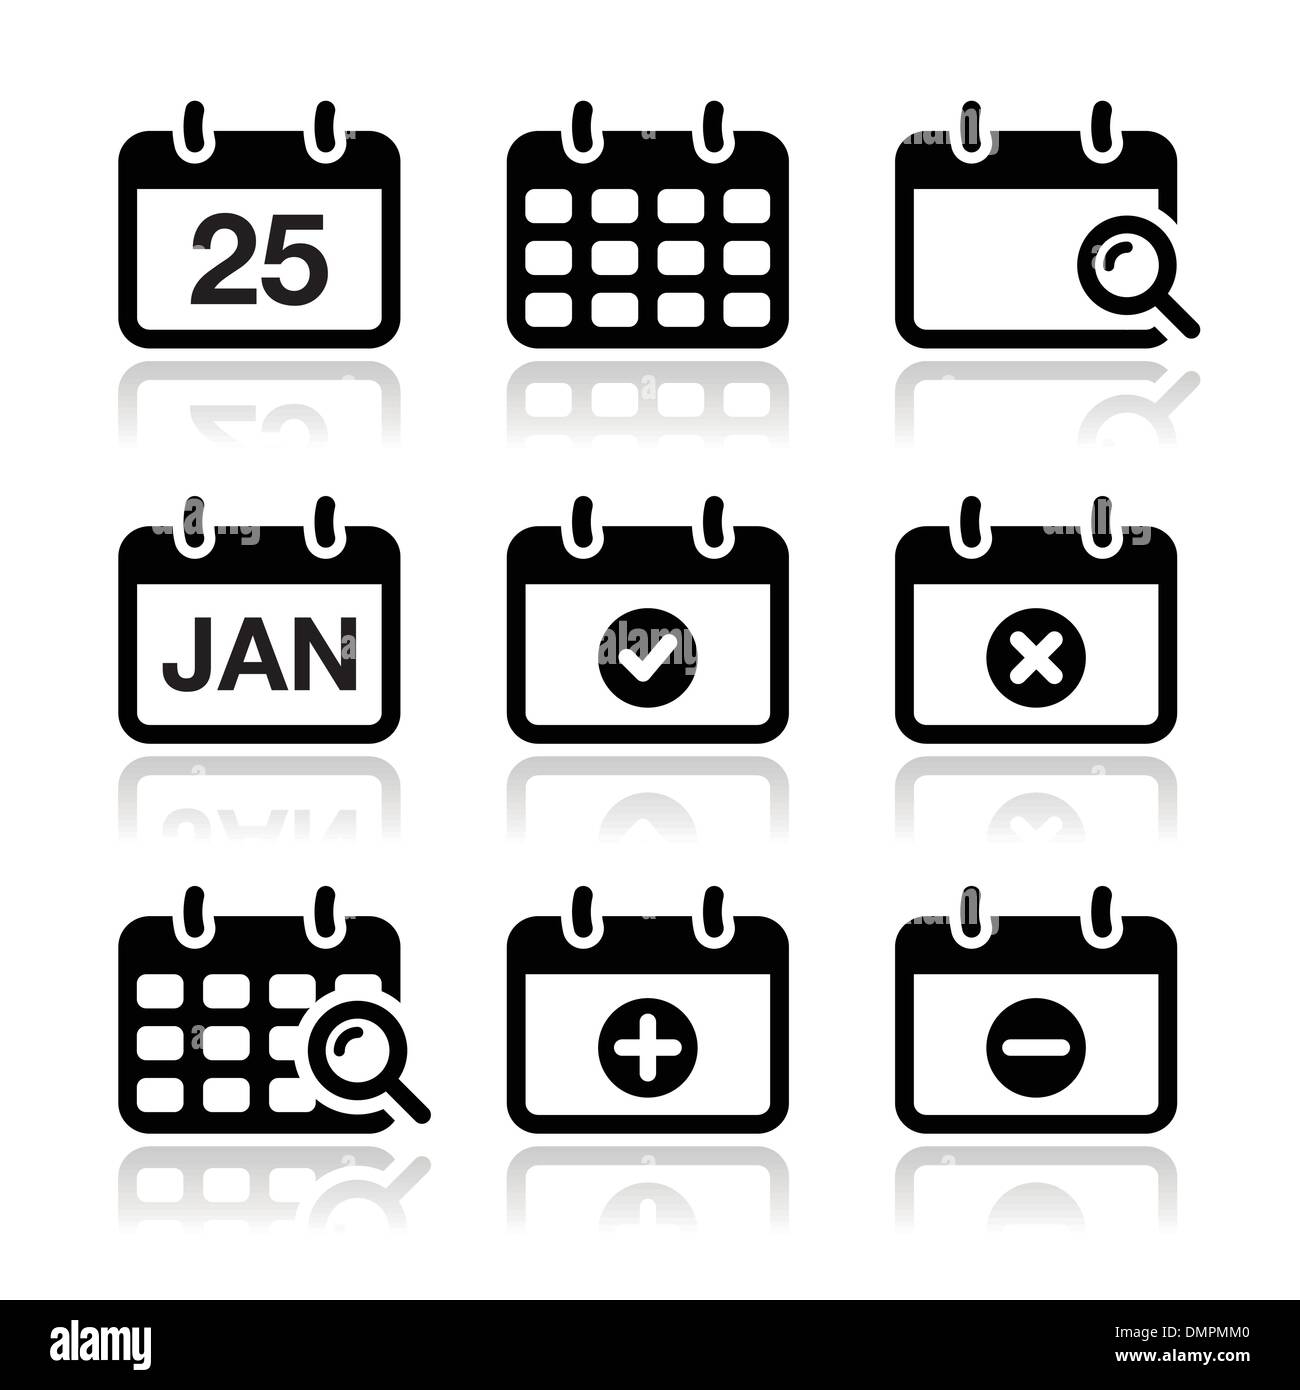 Calendar date vector icons set Stock Vector